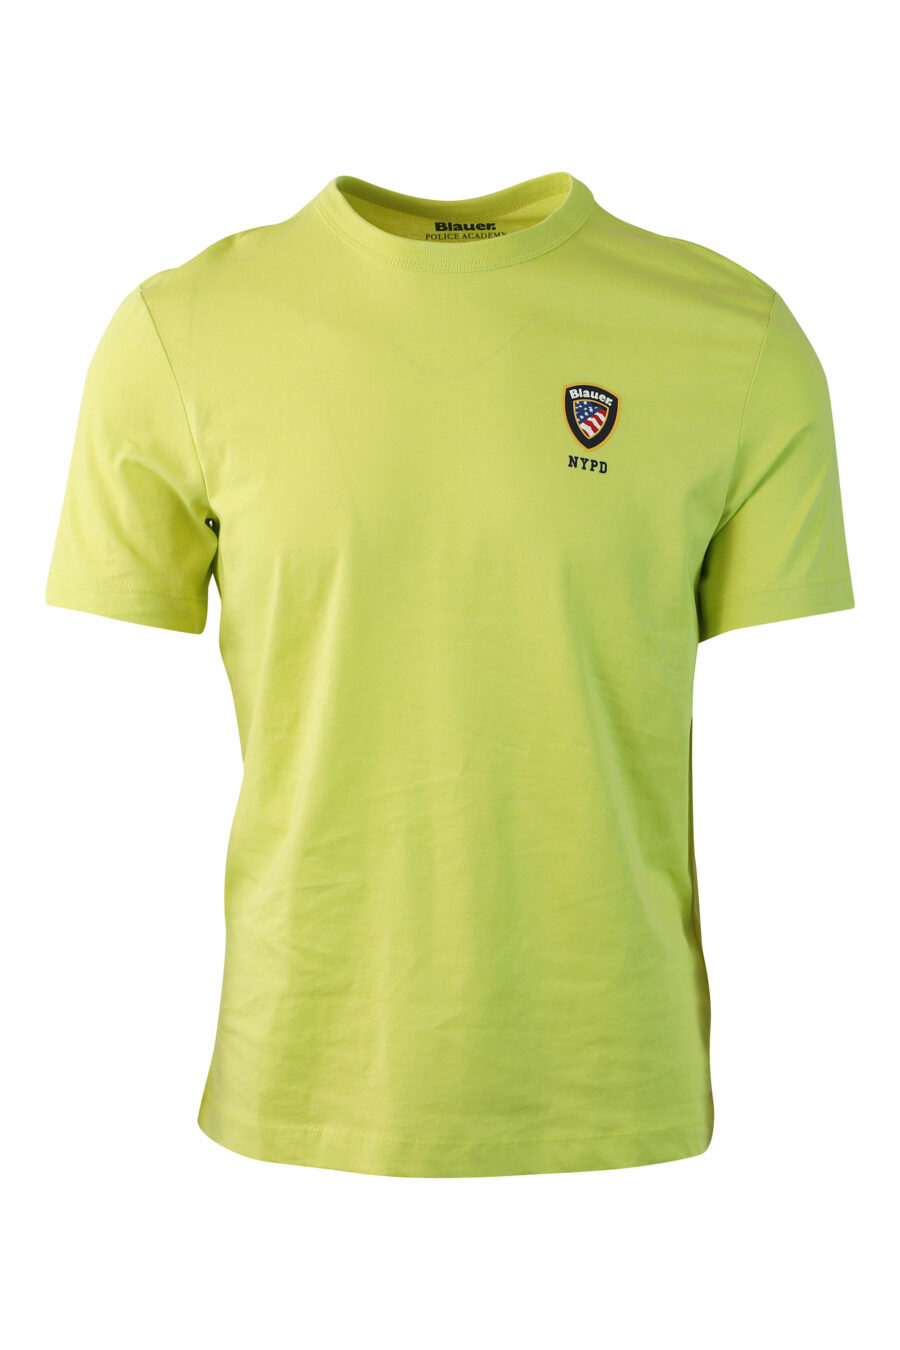 Camiseta verde lima con minilogo escudo - IMG 0070